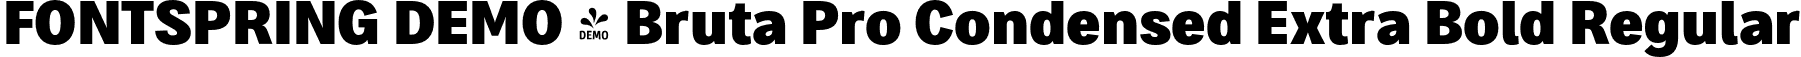 FONTSPRING DEMO - Bruta Pro Condensed Extra Bold Regular font | Fontspring-DEMO-brutaprocondensed-extrabold.otf